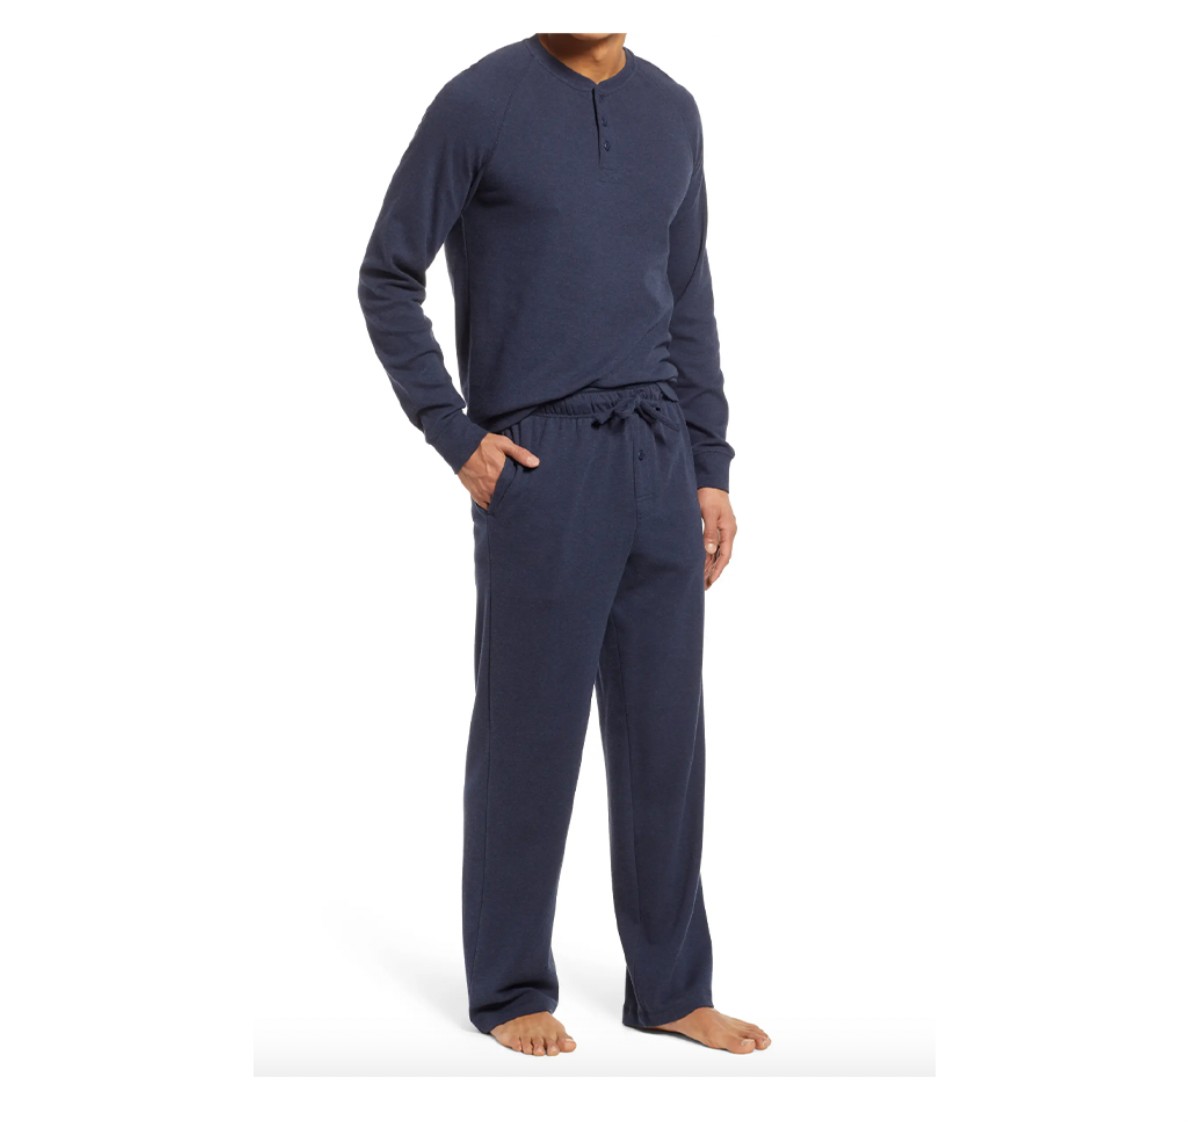 Best Deal for LAPASA Women's Pajama Set, Cotton Pajamas Plaid Long Sleeve